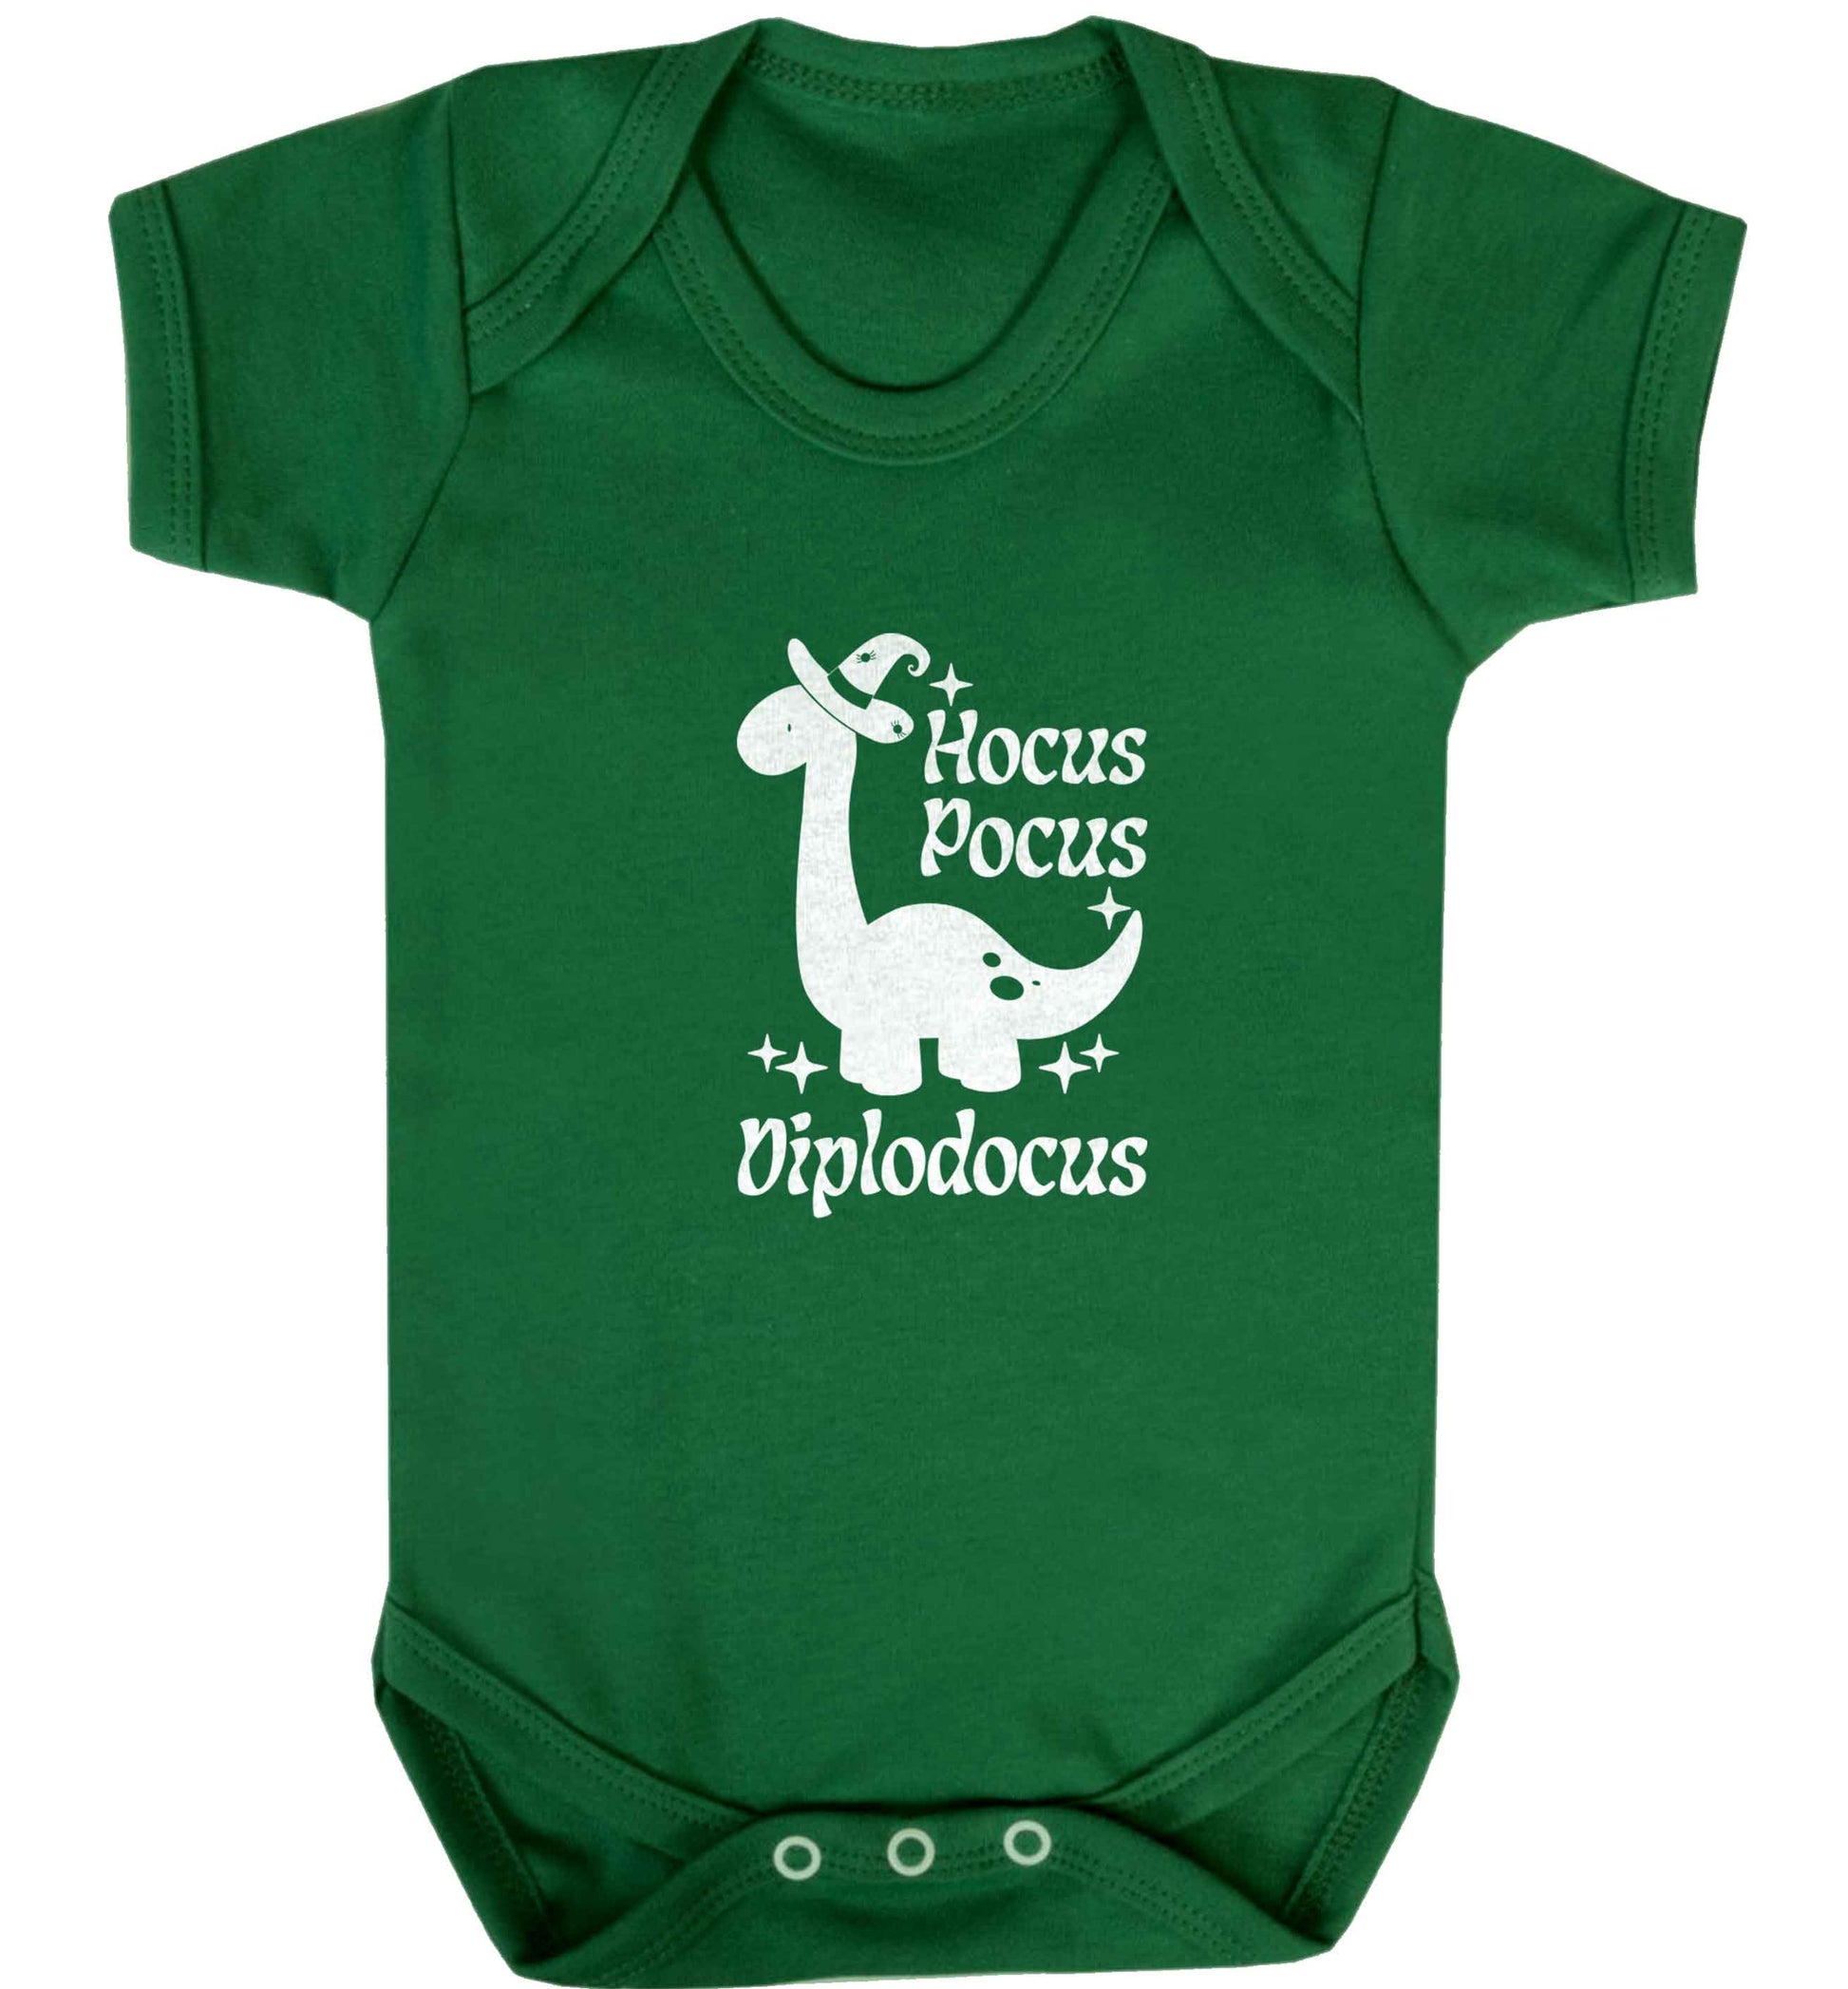 Hocus pocus diplodocus Kit baby vest green 18-24 months